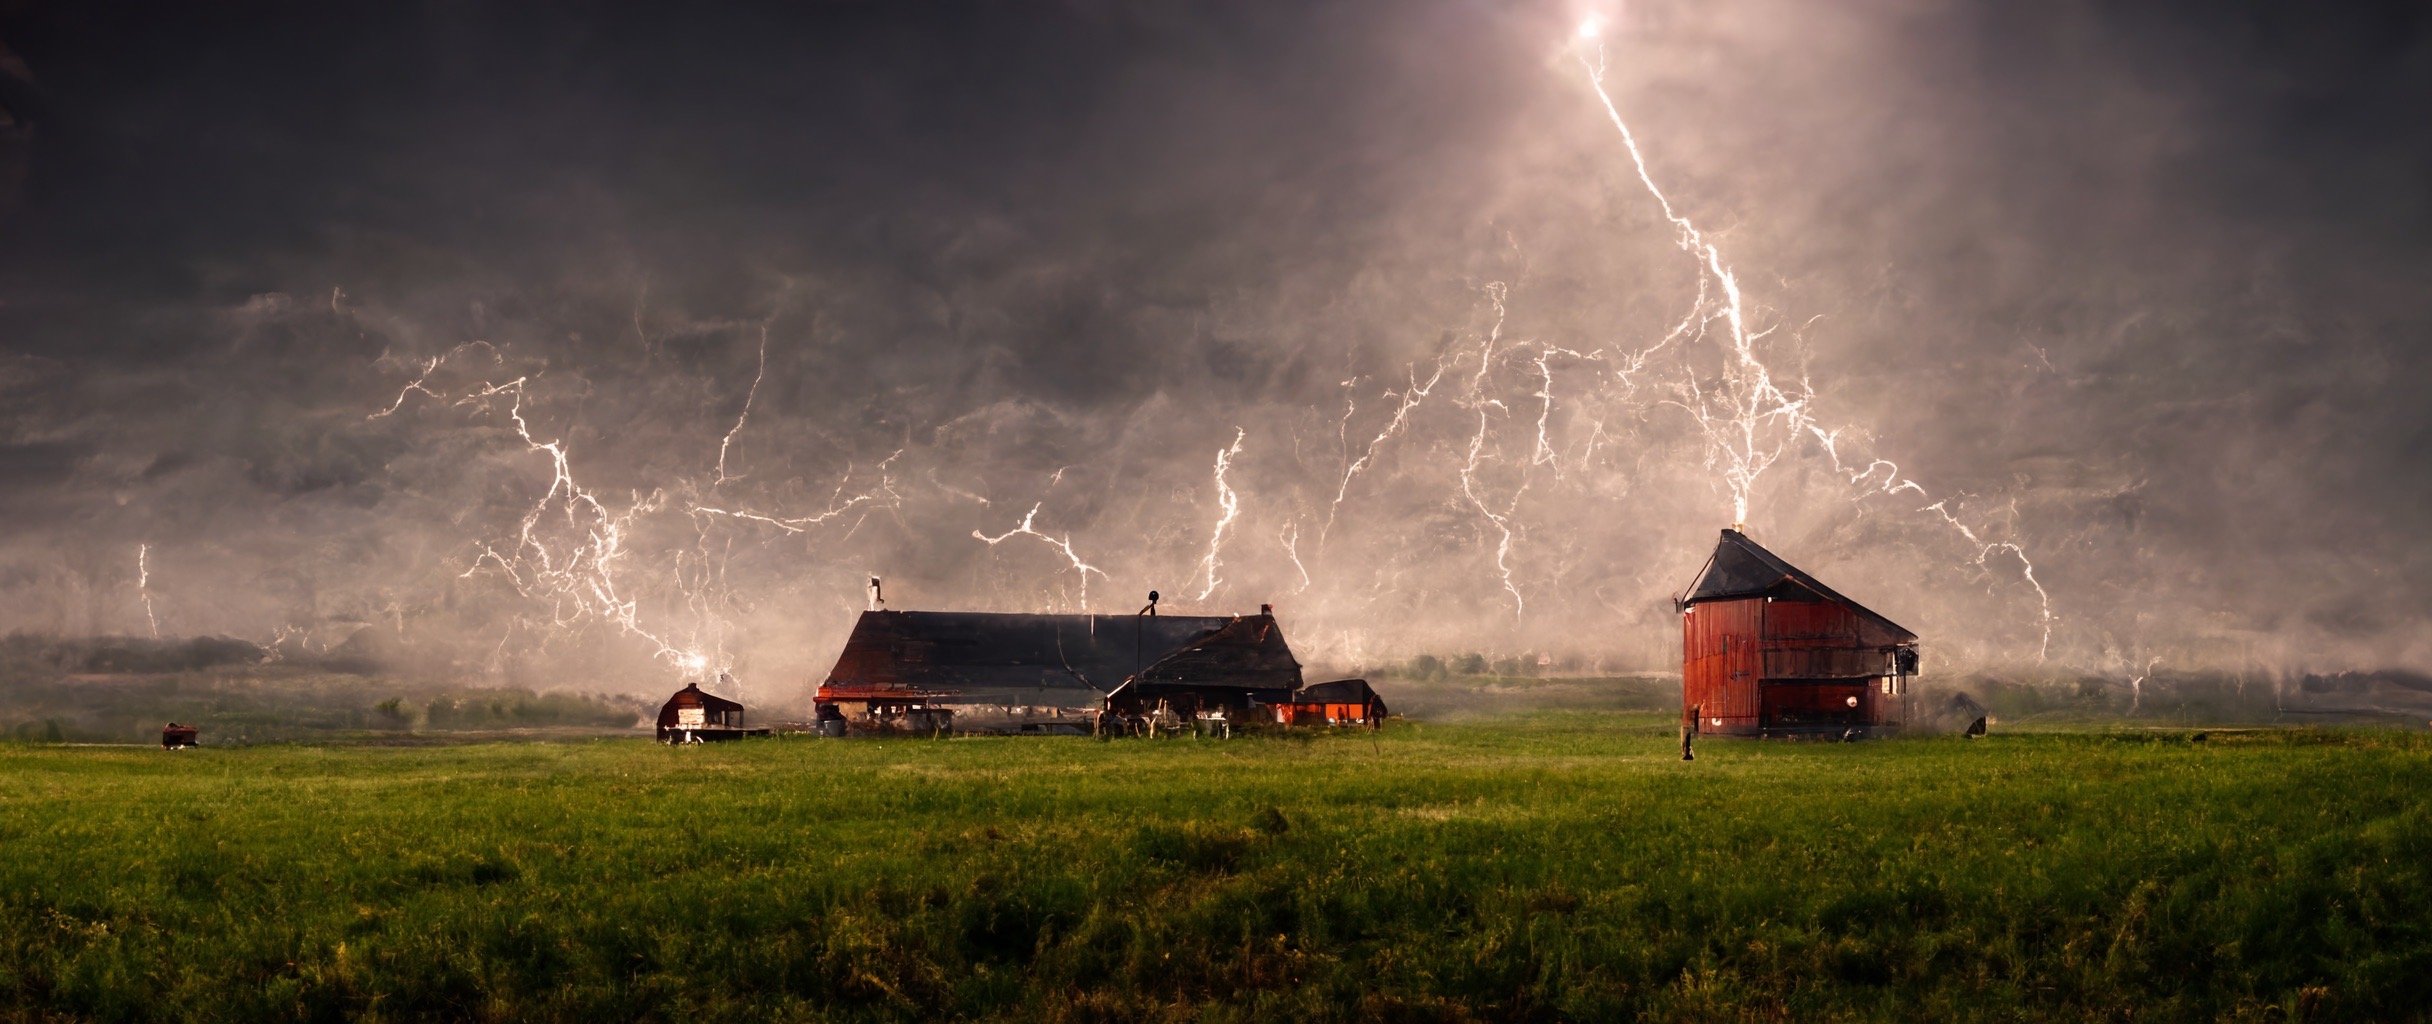 c02c9b8f-fed7-4775-b670-8782458ef246_S3RAPH_farmland_with_1_barn_lonely_in_an_epic_lightning_storm._Cinematic_composition_render_w_2048_h__858.JPG